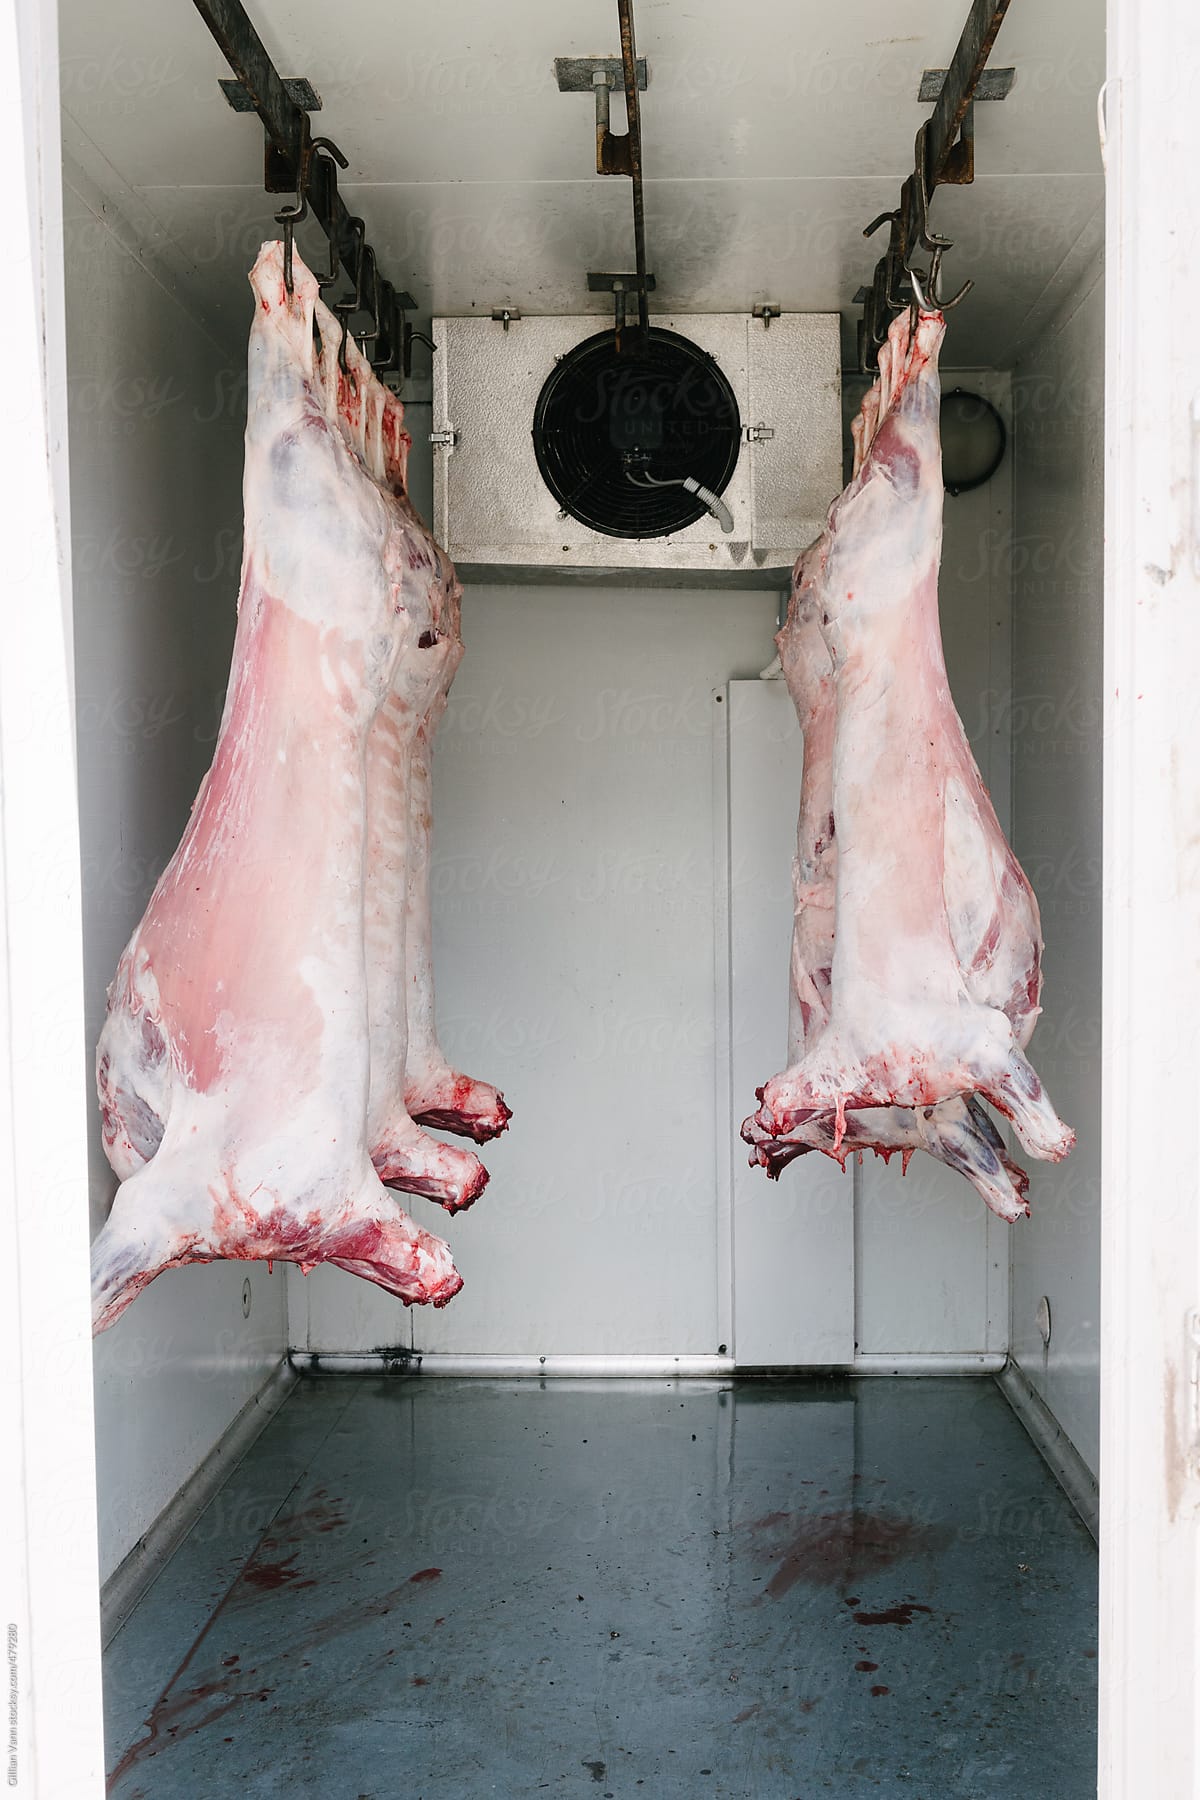 lamb carcass hanging in mobile fridge unit